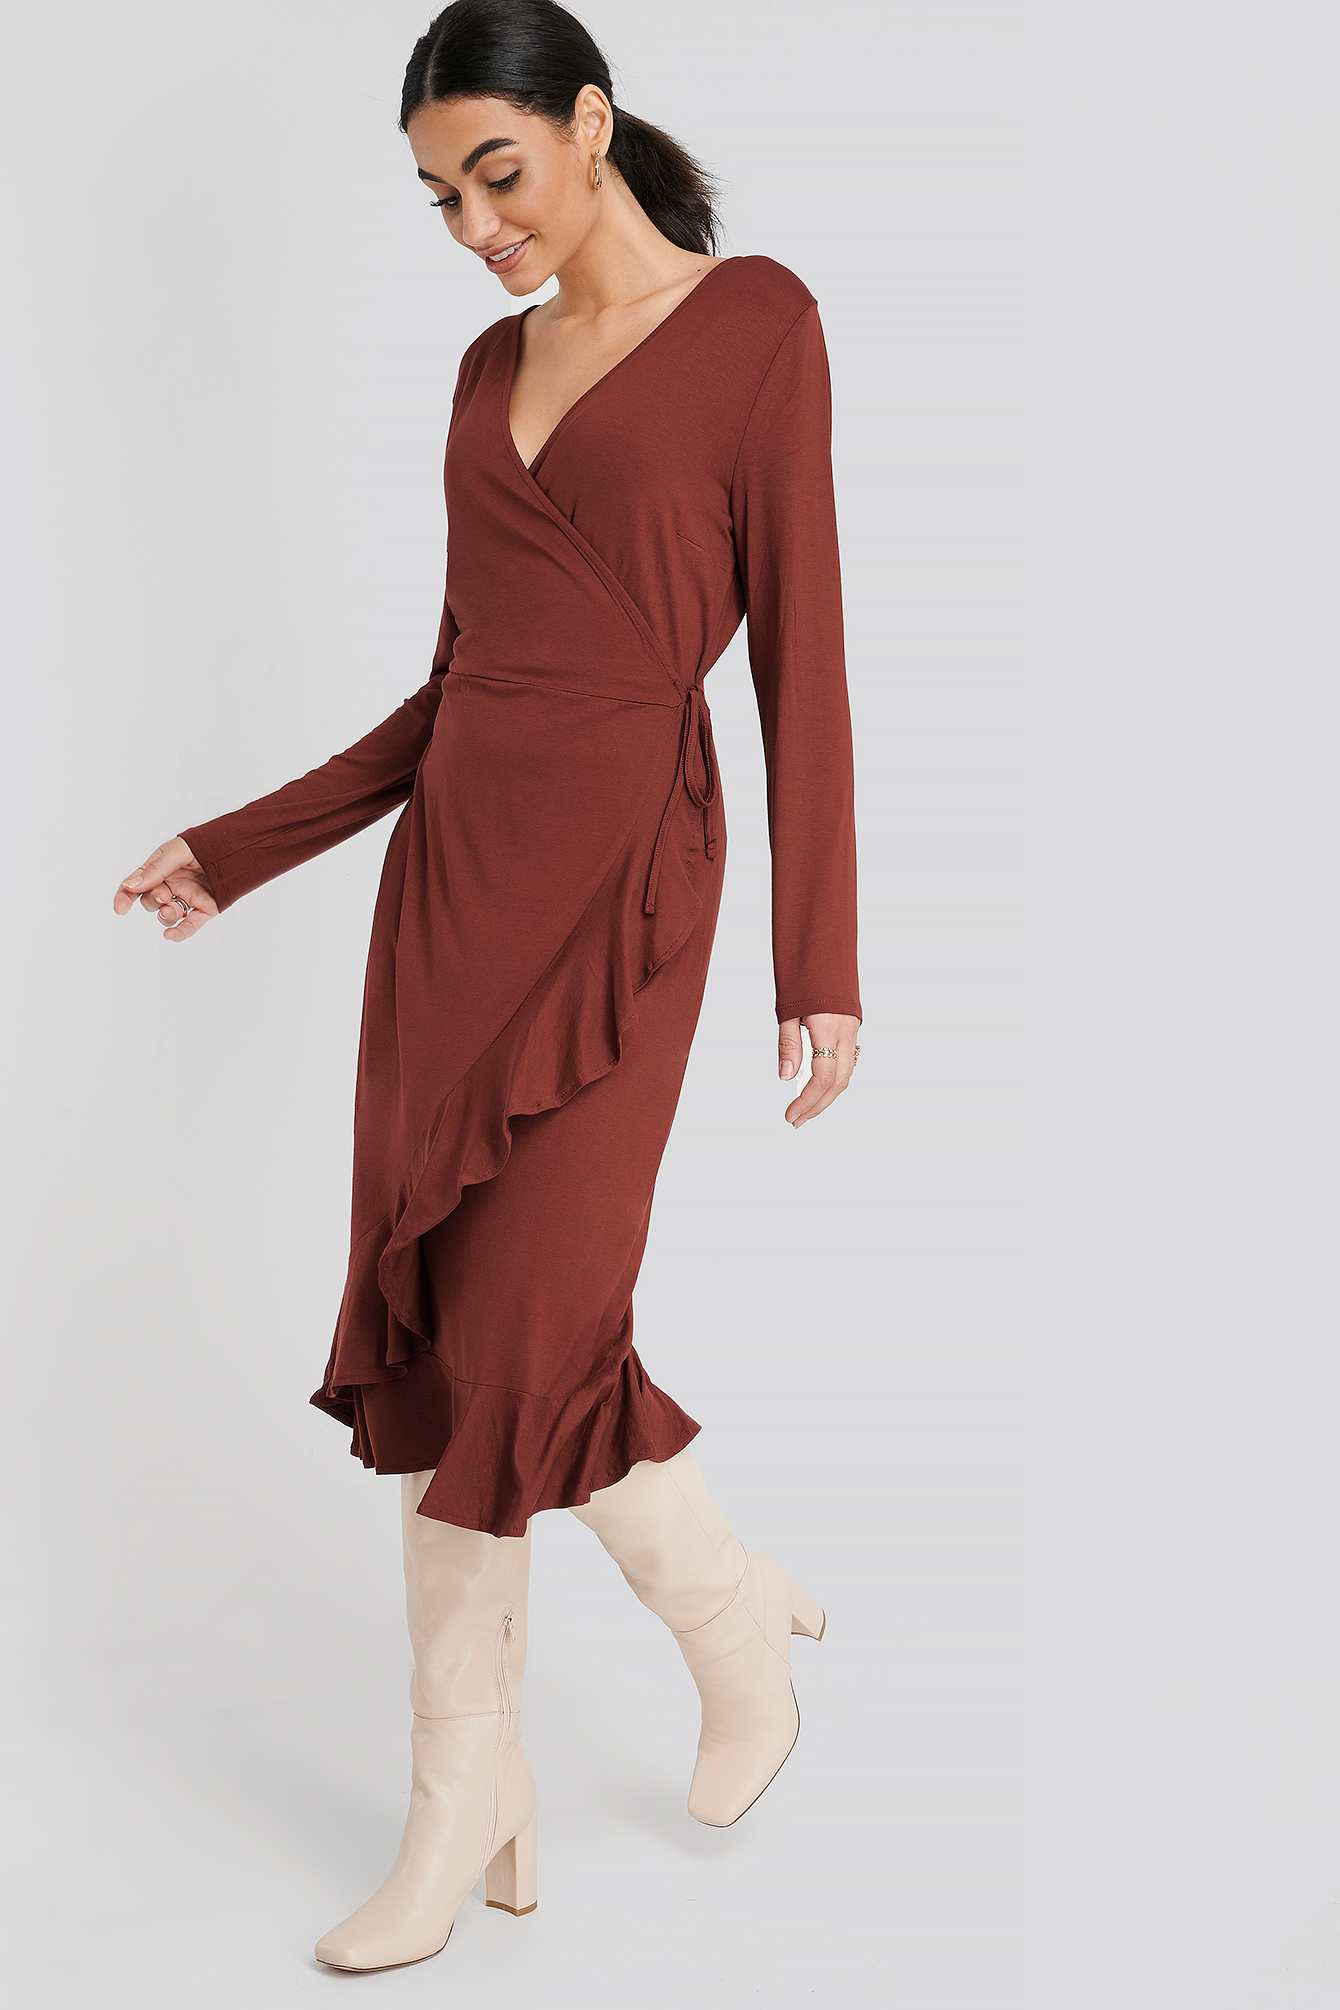 Burgundy Trendyol Wrap Knitted Dress